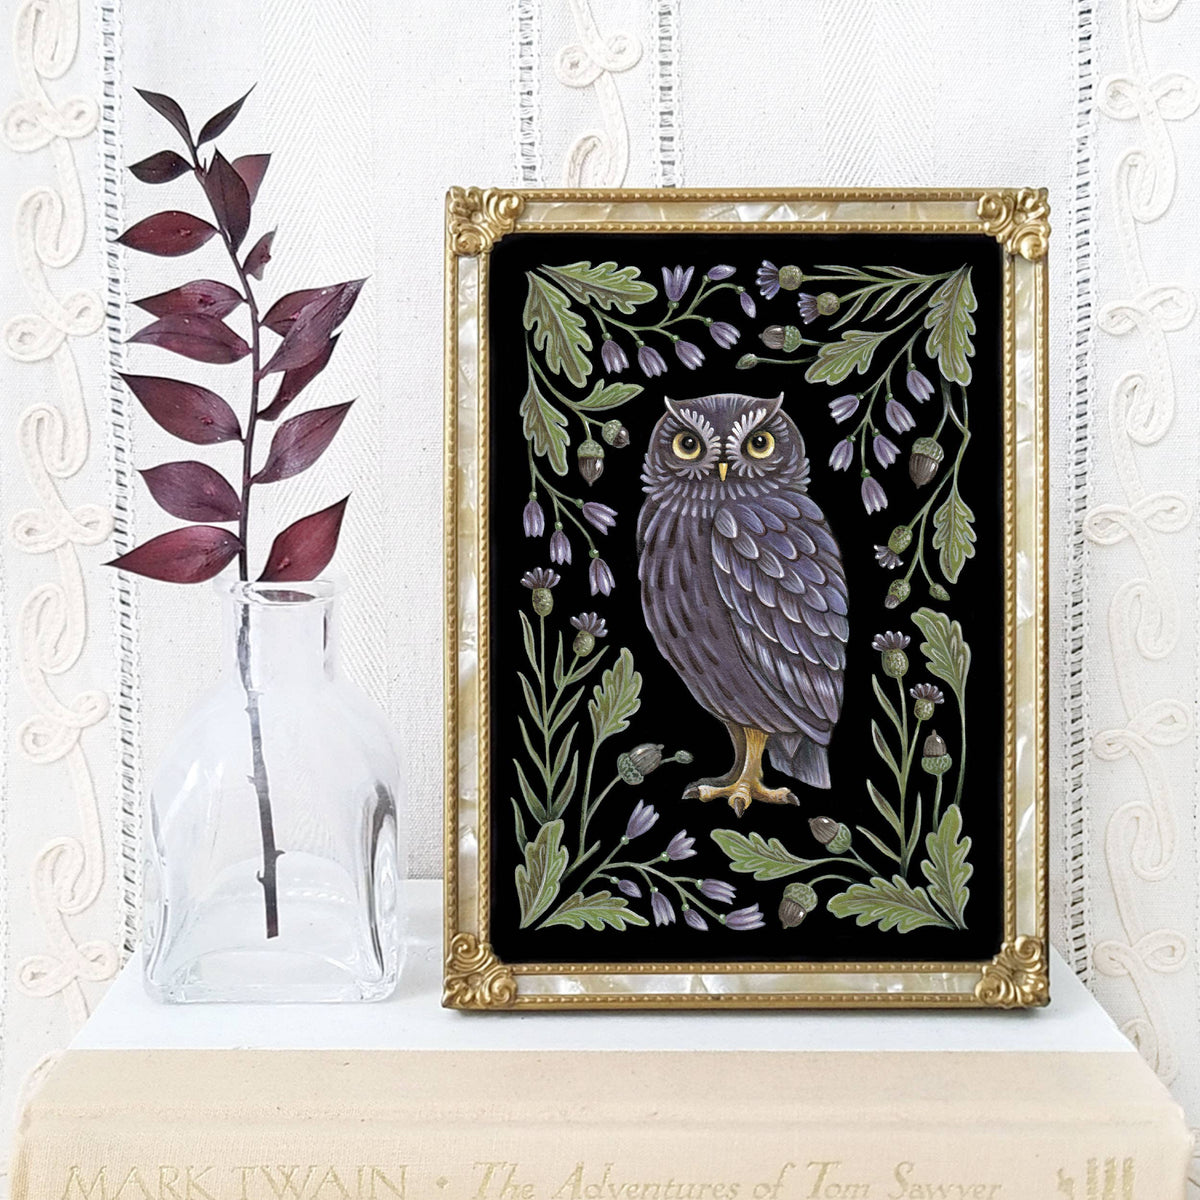 Faina Lorah Owl Art Print Folk Decor: 5x7